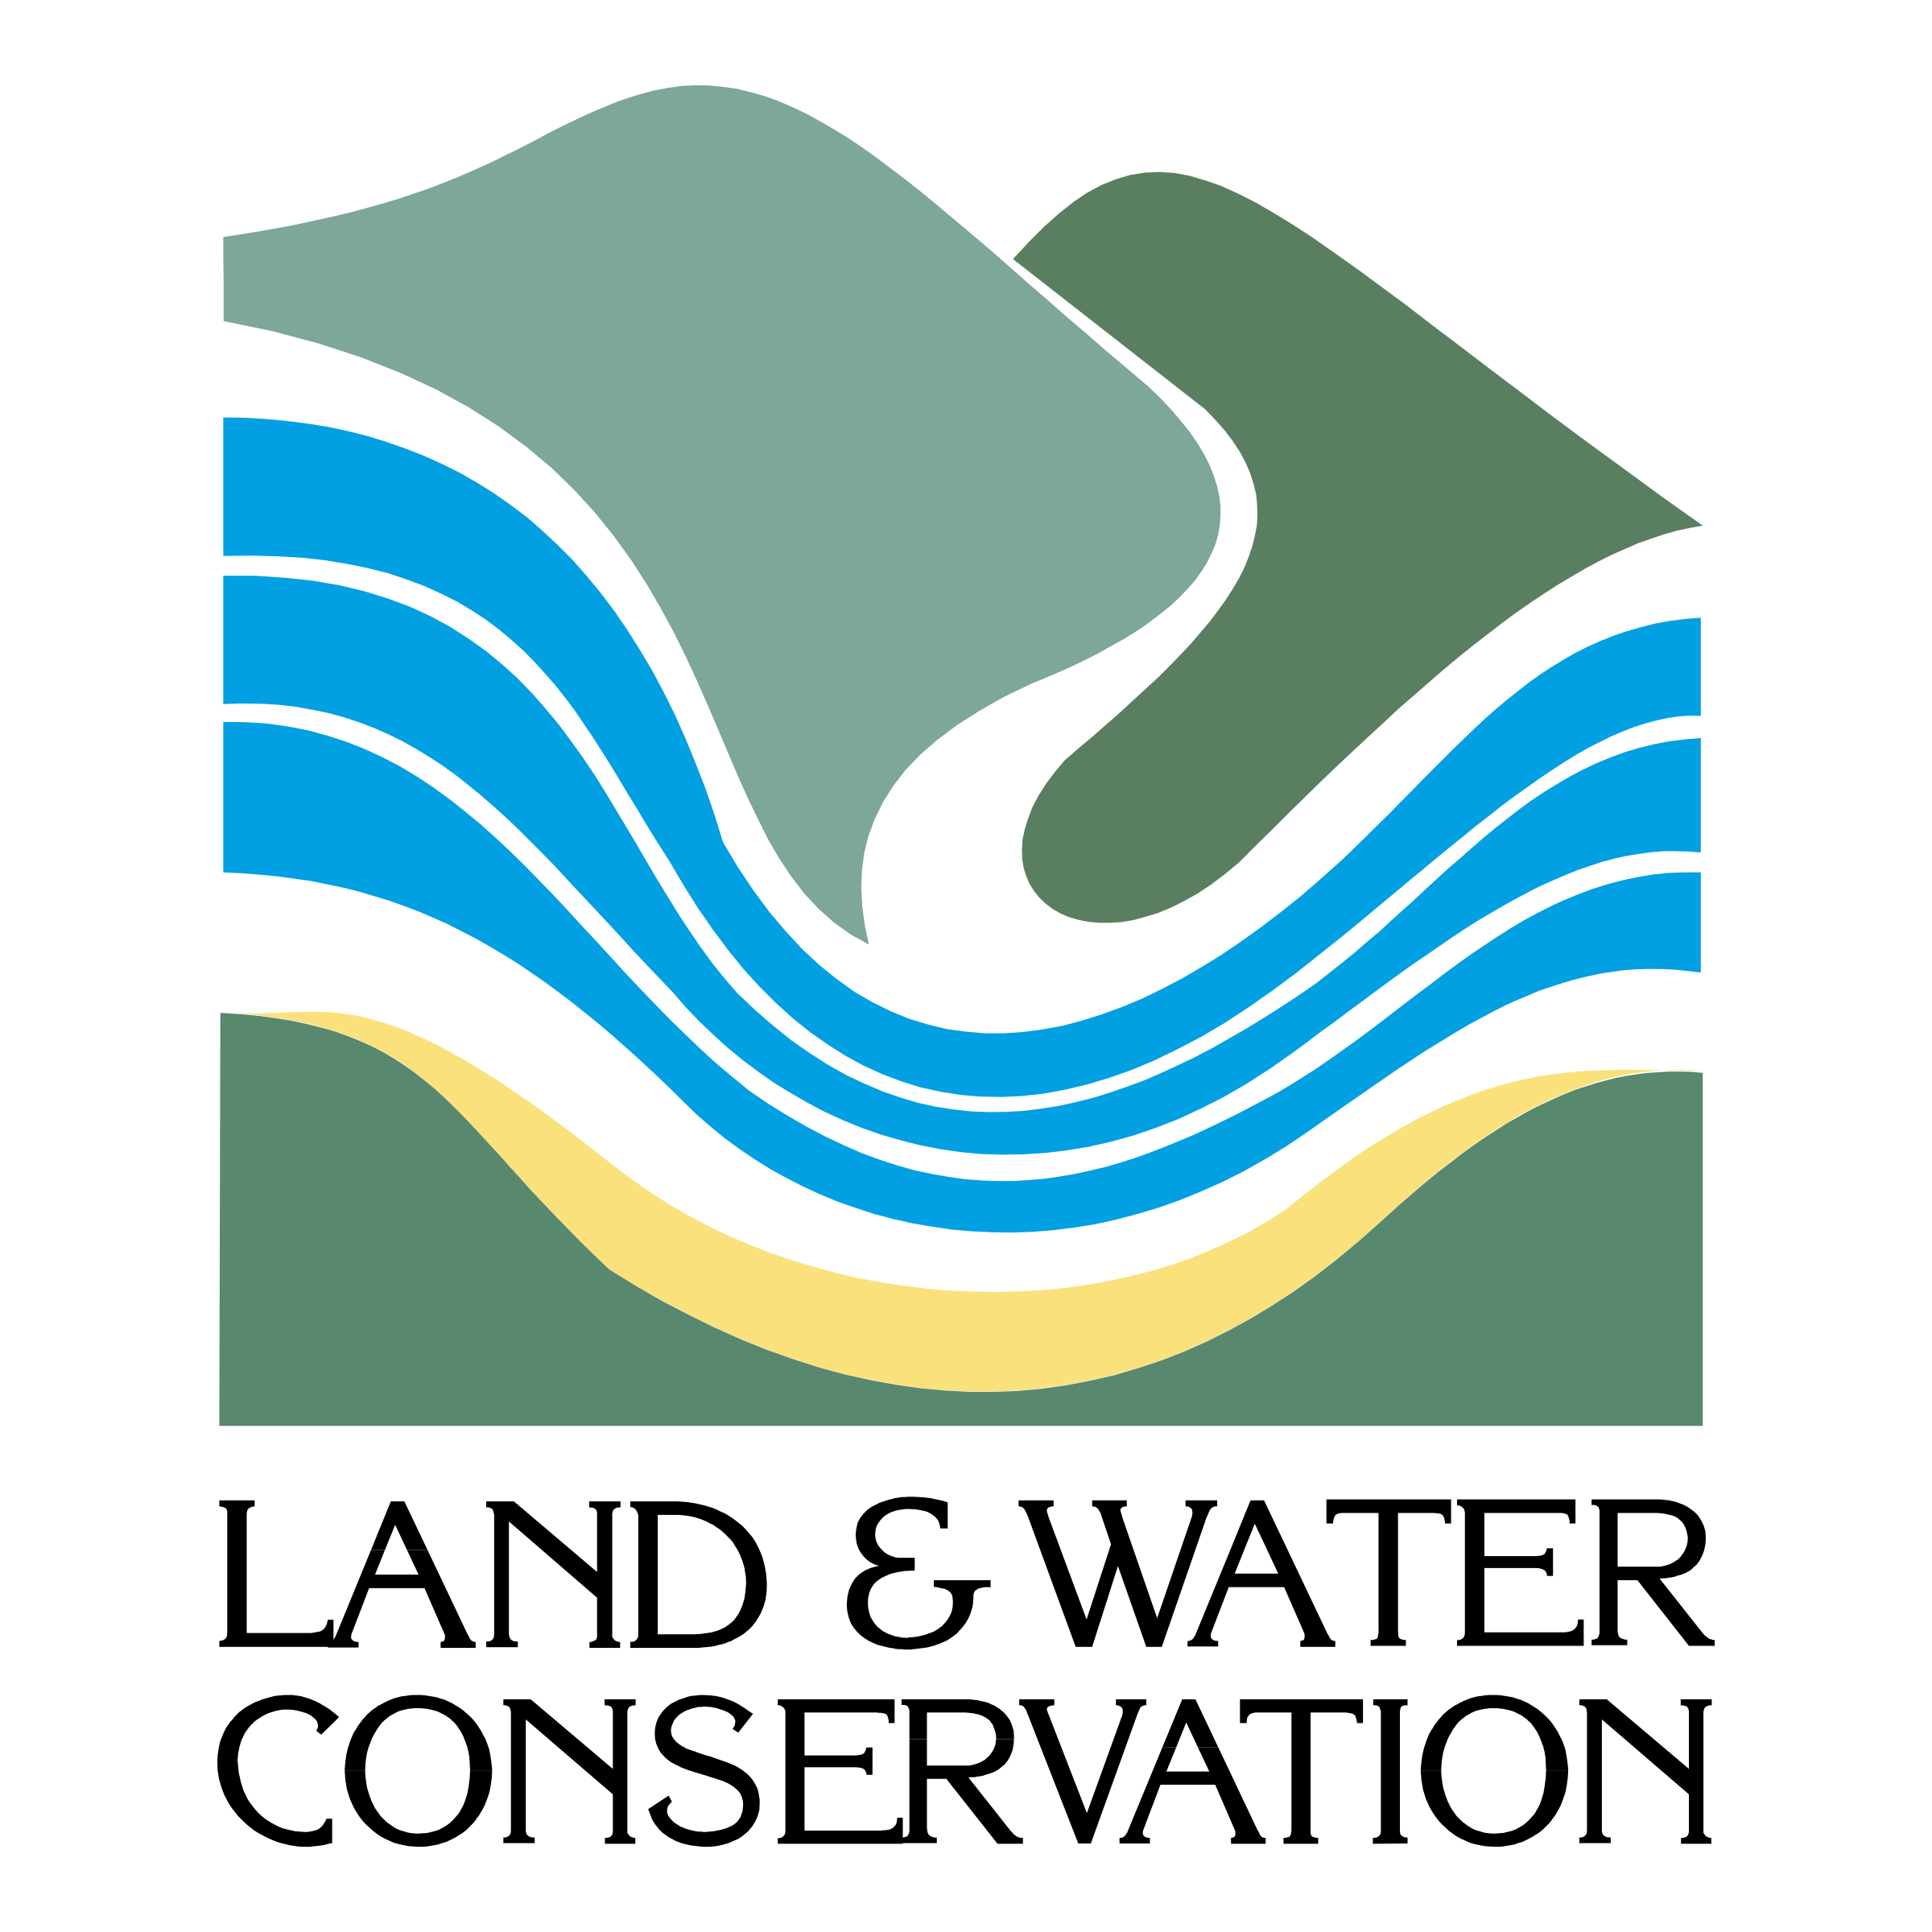 Conservation Logo - Land and Water Conservation Logo PNG Transparent & SVG Vector ...